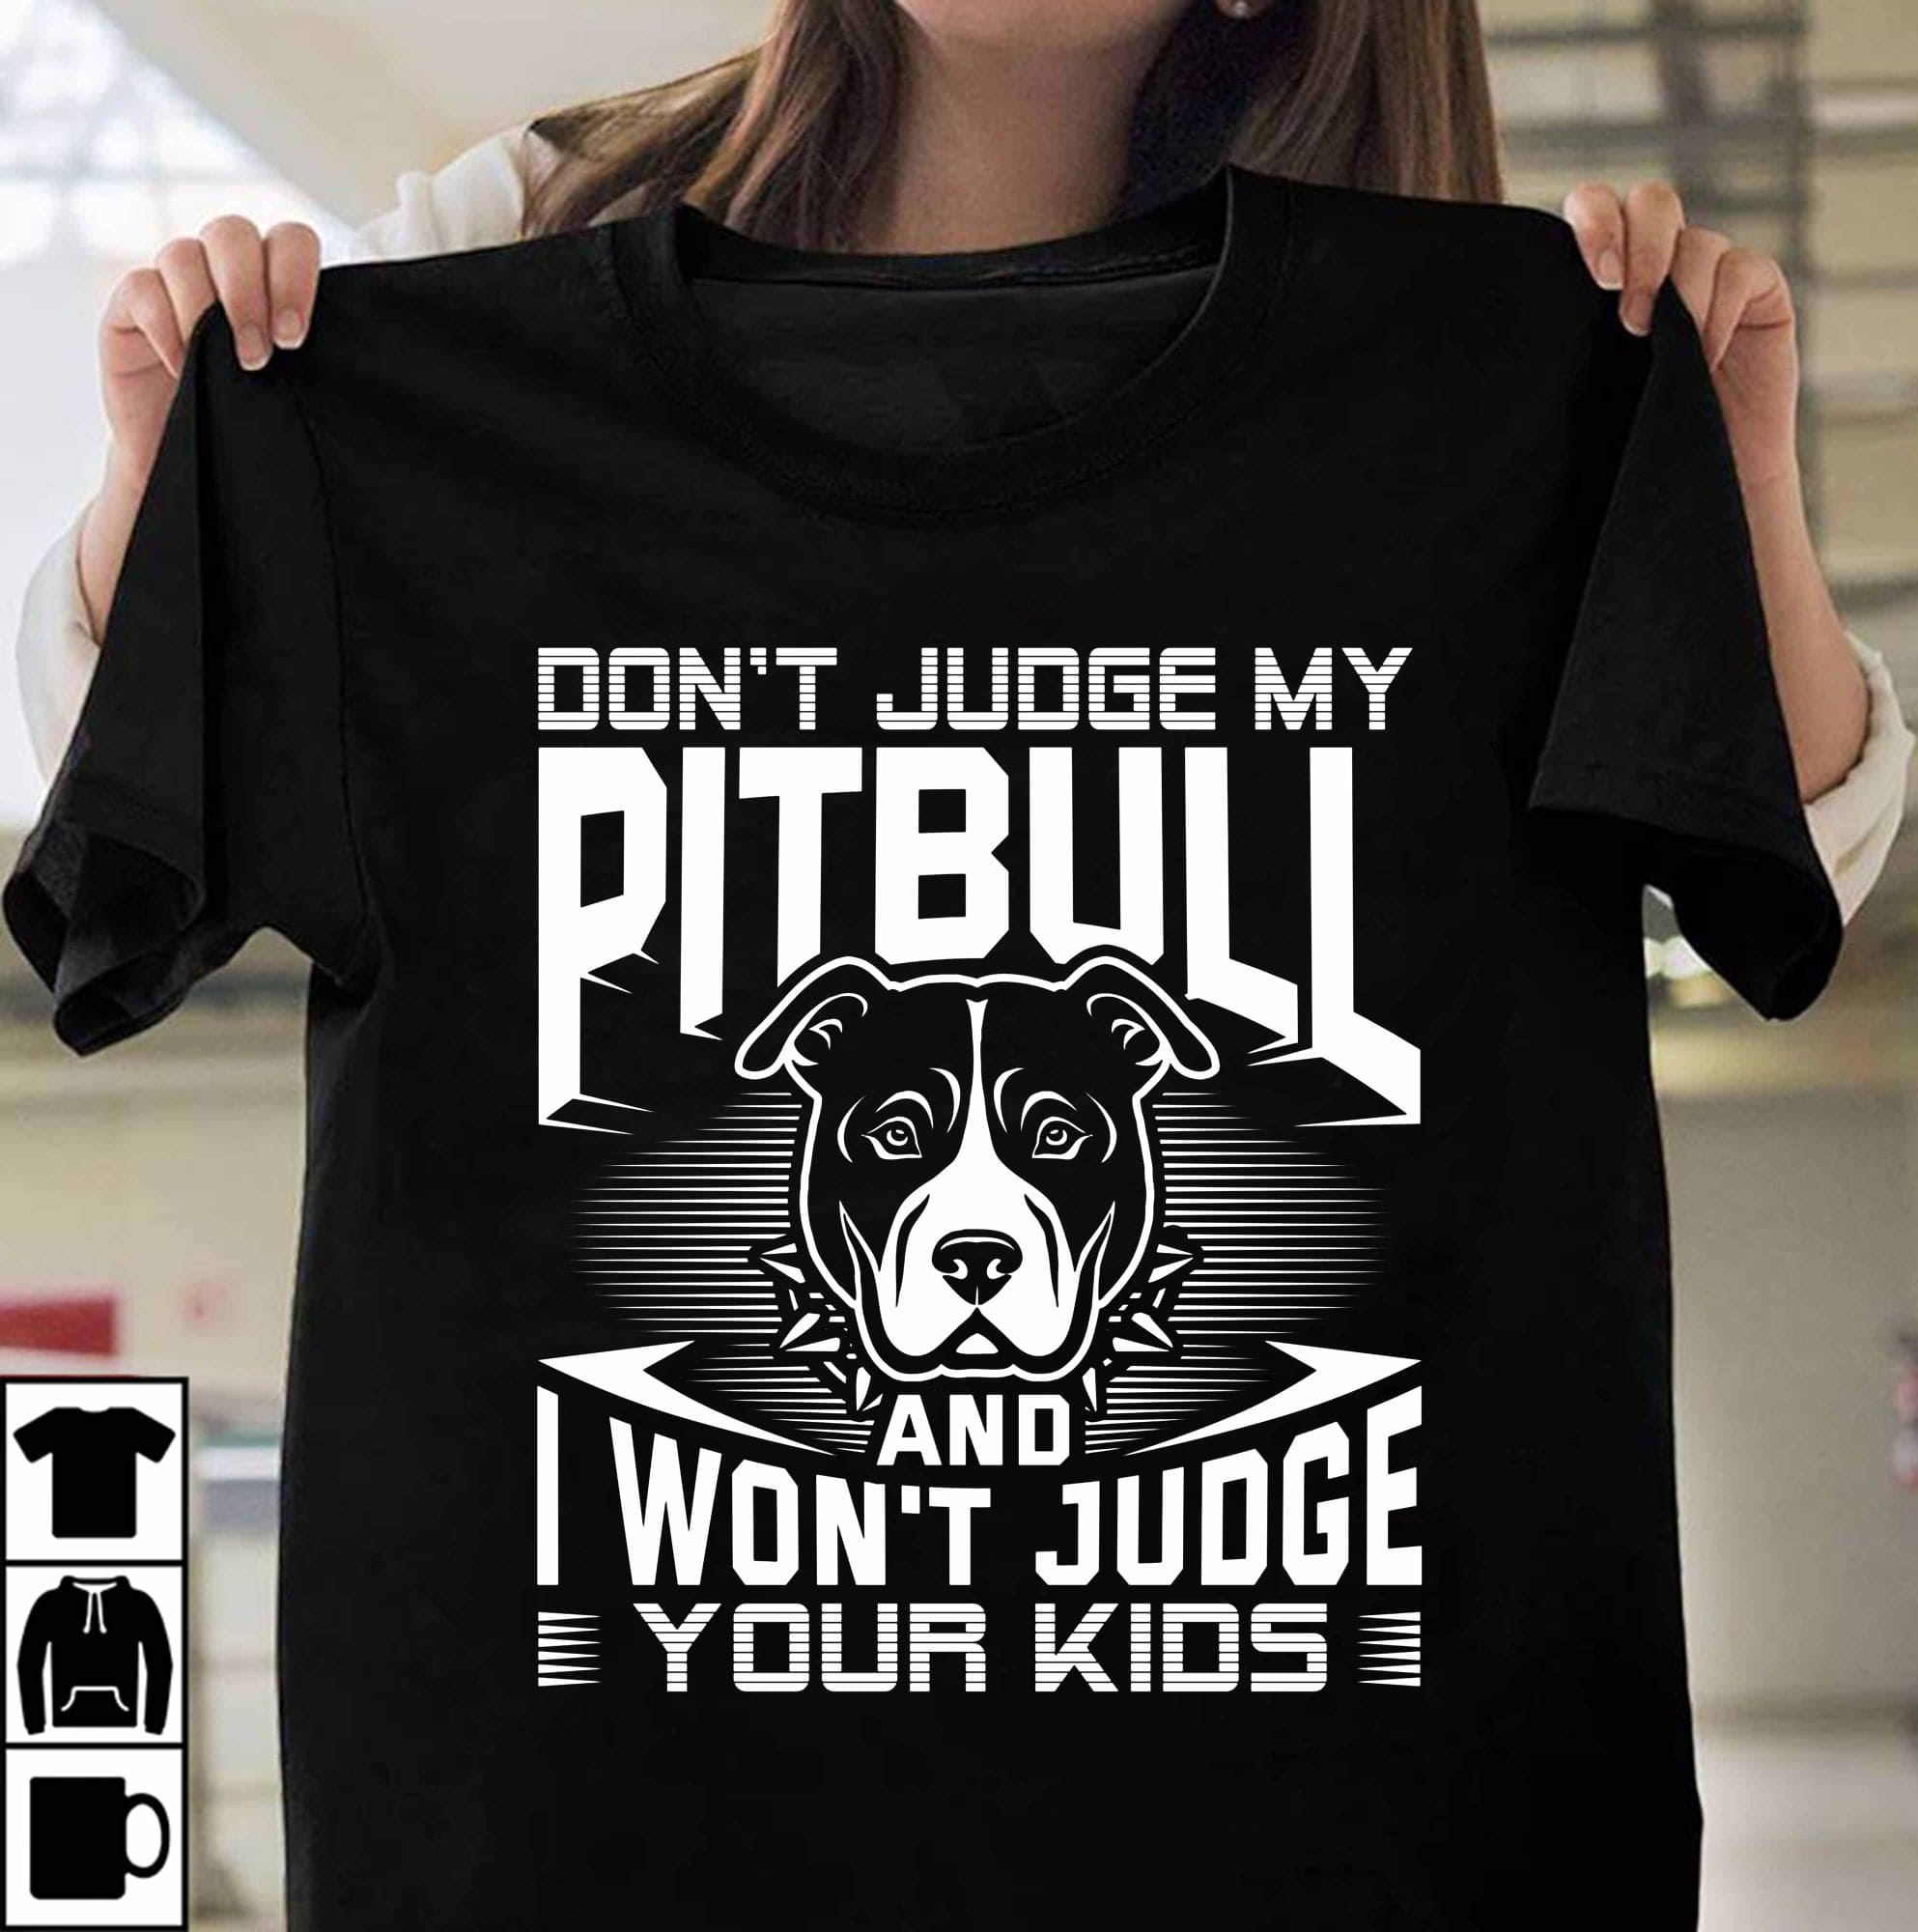 Don't judge my pitbull and I won't judge your kids - Pitbull dog graphic T-shirt, pitbull dog protector